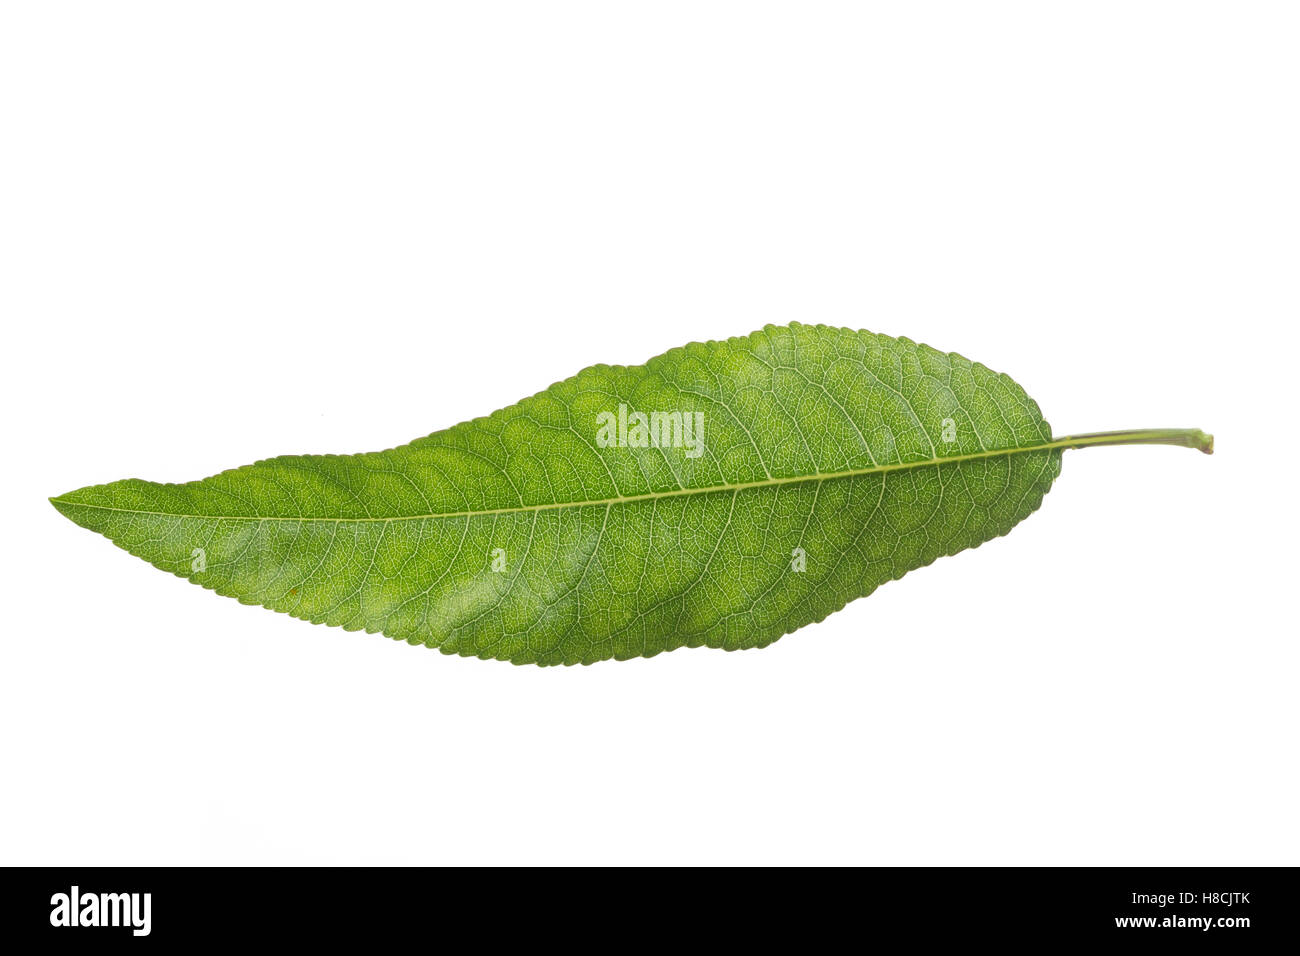 Mandelbaum, Mandel-Baum, Mandel, Prunus dulcis, Amygdalus dulcis, Amygdalus communis, Prunus amygdalus, Amygdalus amara, Amygdal Stock Photo